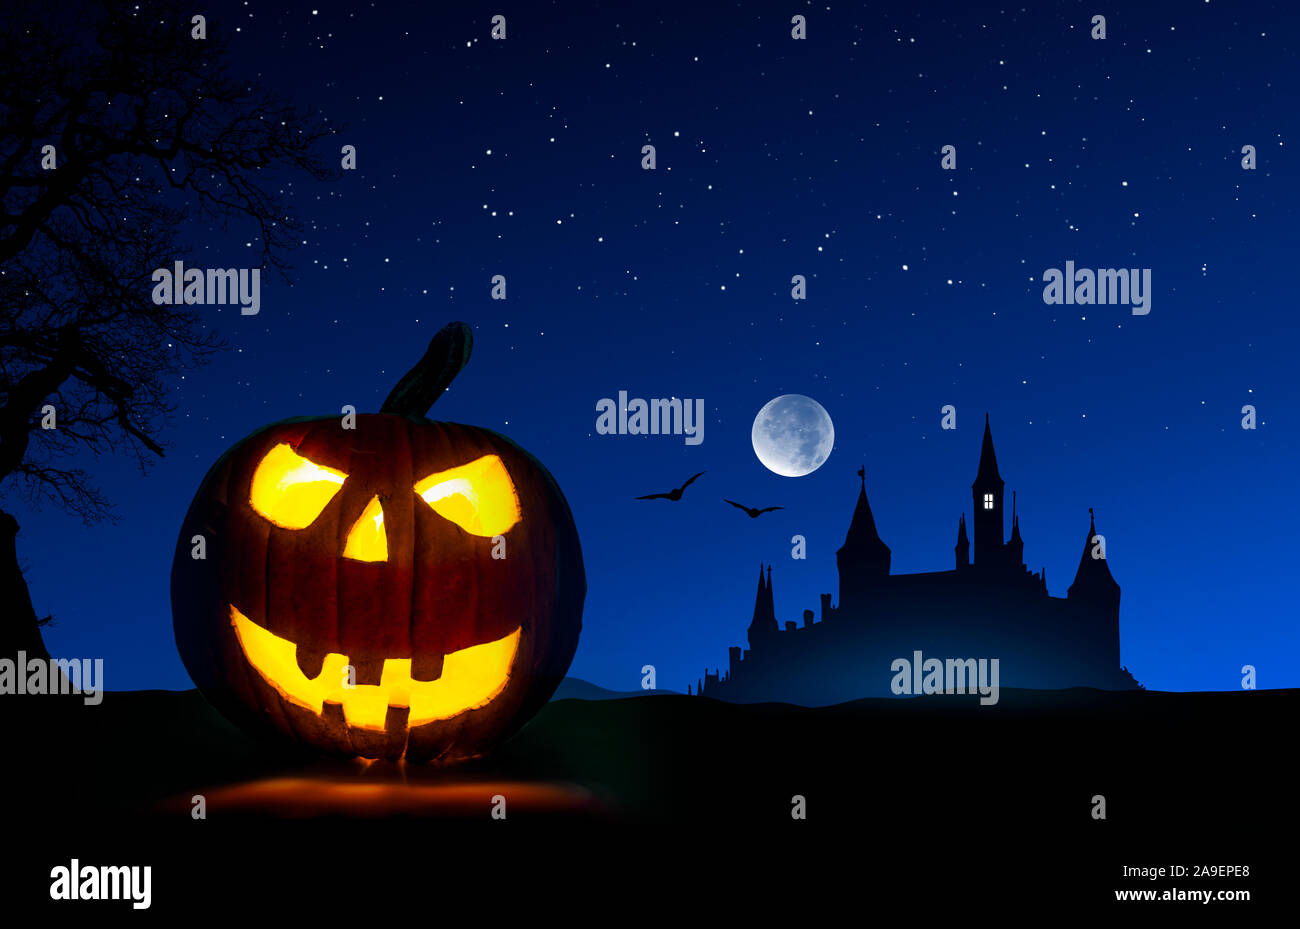 Halloween Poster Stock Photo